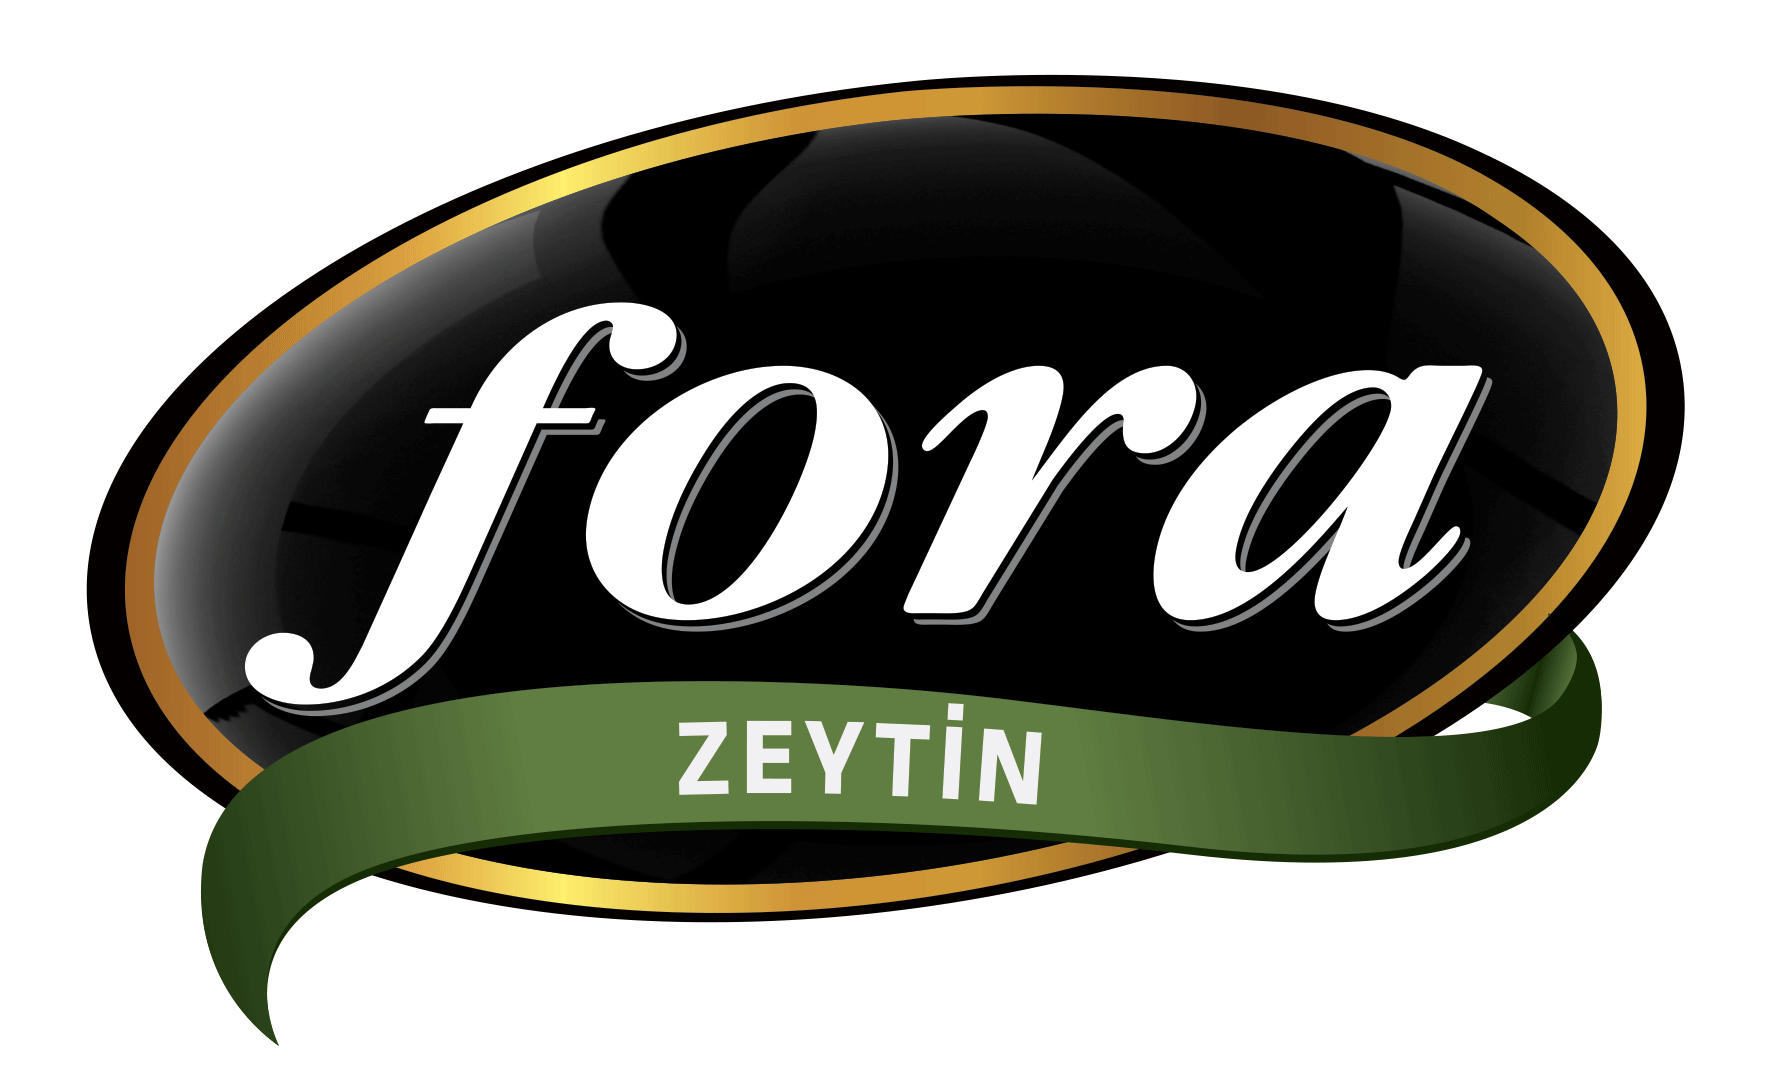 Теме fora. Fora Zeytin logo. Fora оливки. Оливка логотип. Логотип кафе оливка.